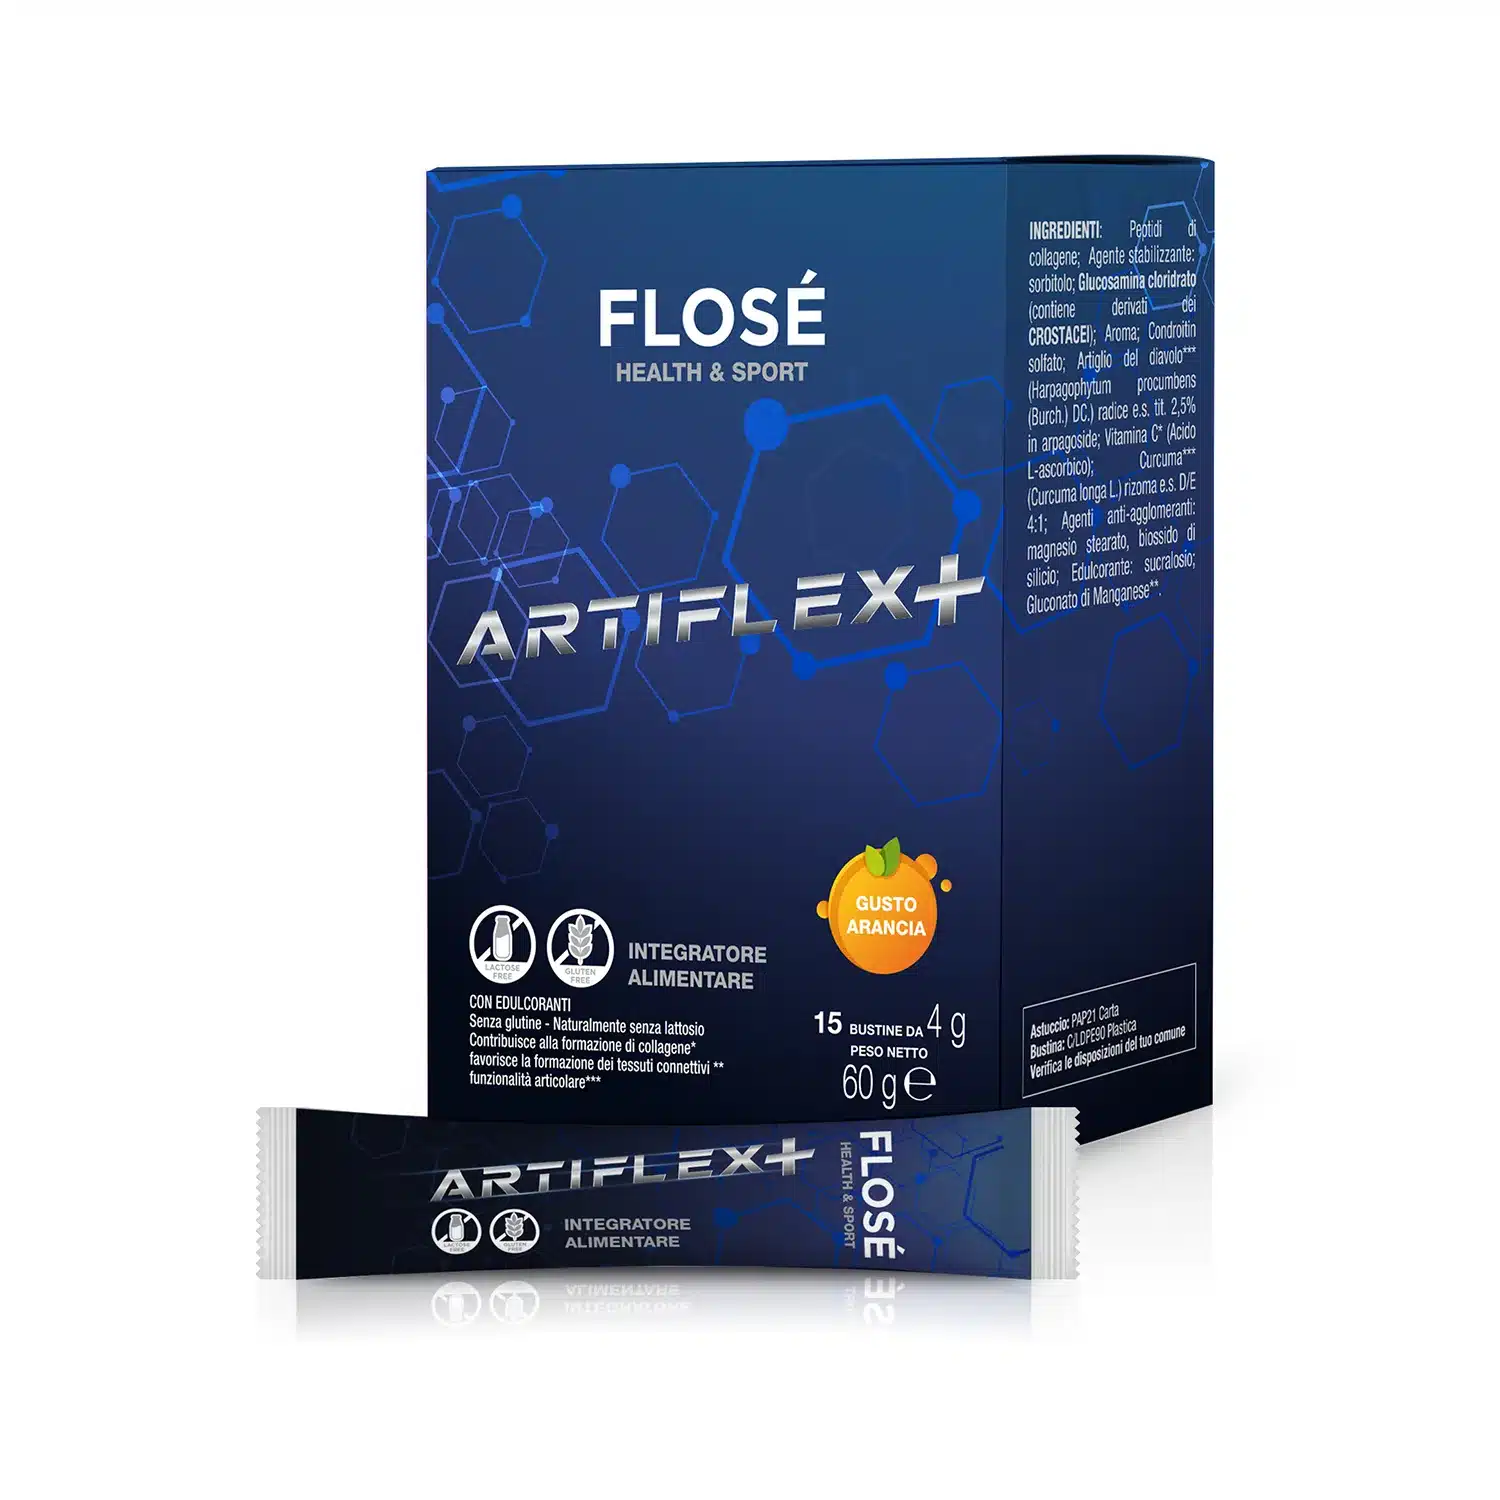 FloseHealthSport_ArtiFlex+